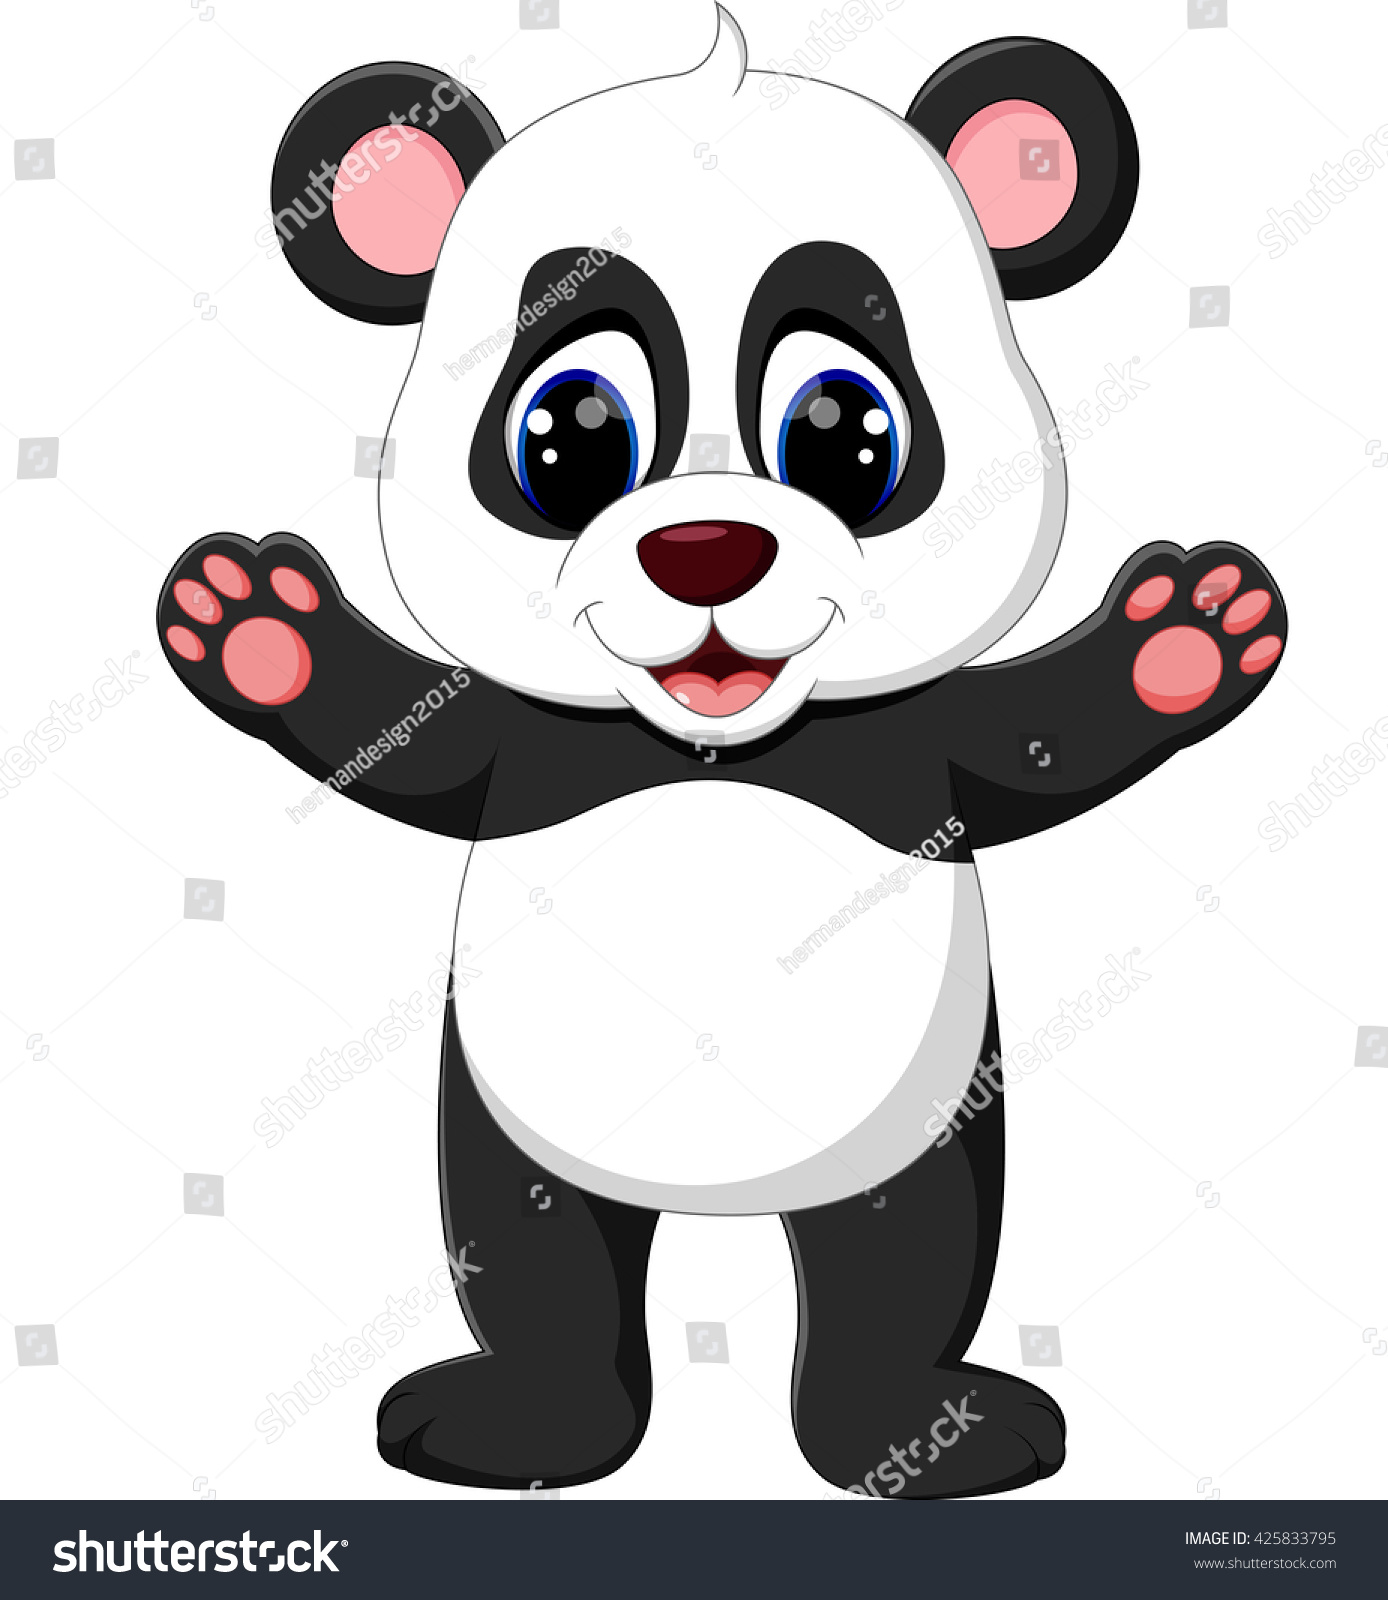 Illustration Of Cute Baby Panda Cartoon - 425833795 : Shutterstock